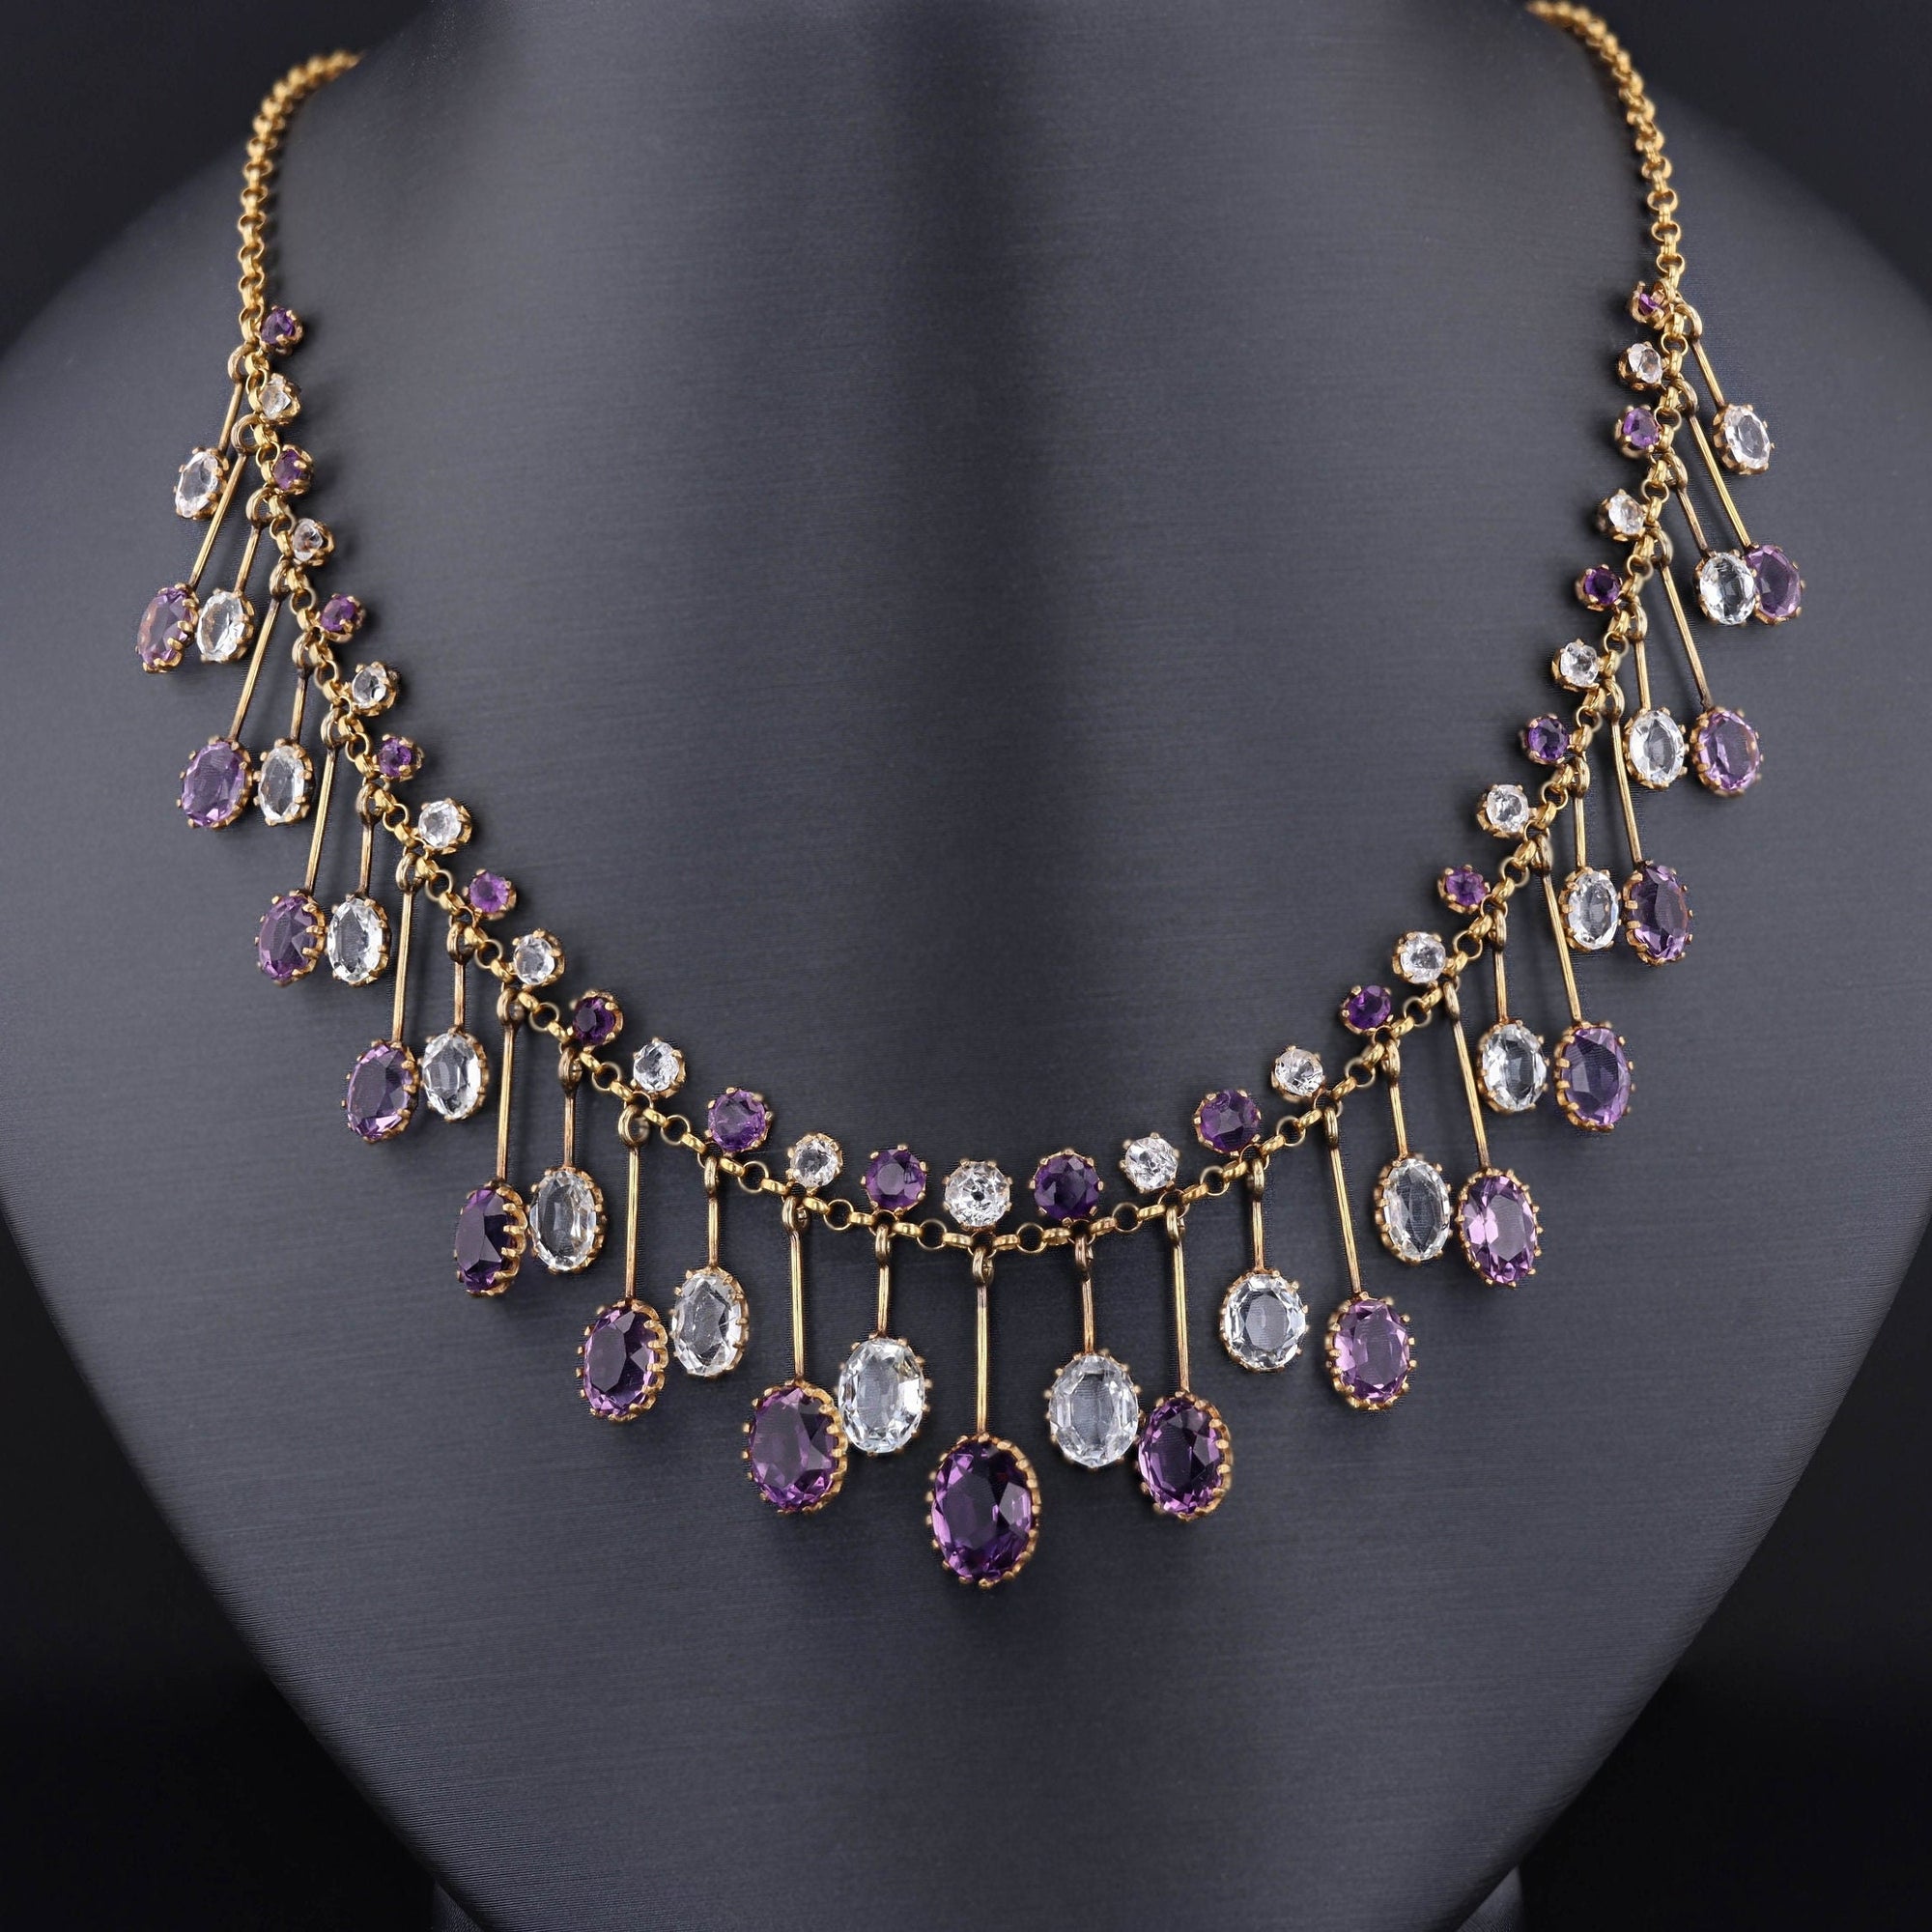 Fringe Necklace | 14k Gold, Amethyst & Aqua Necklace 